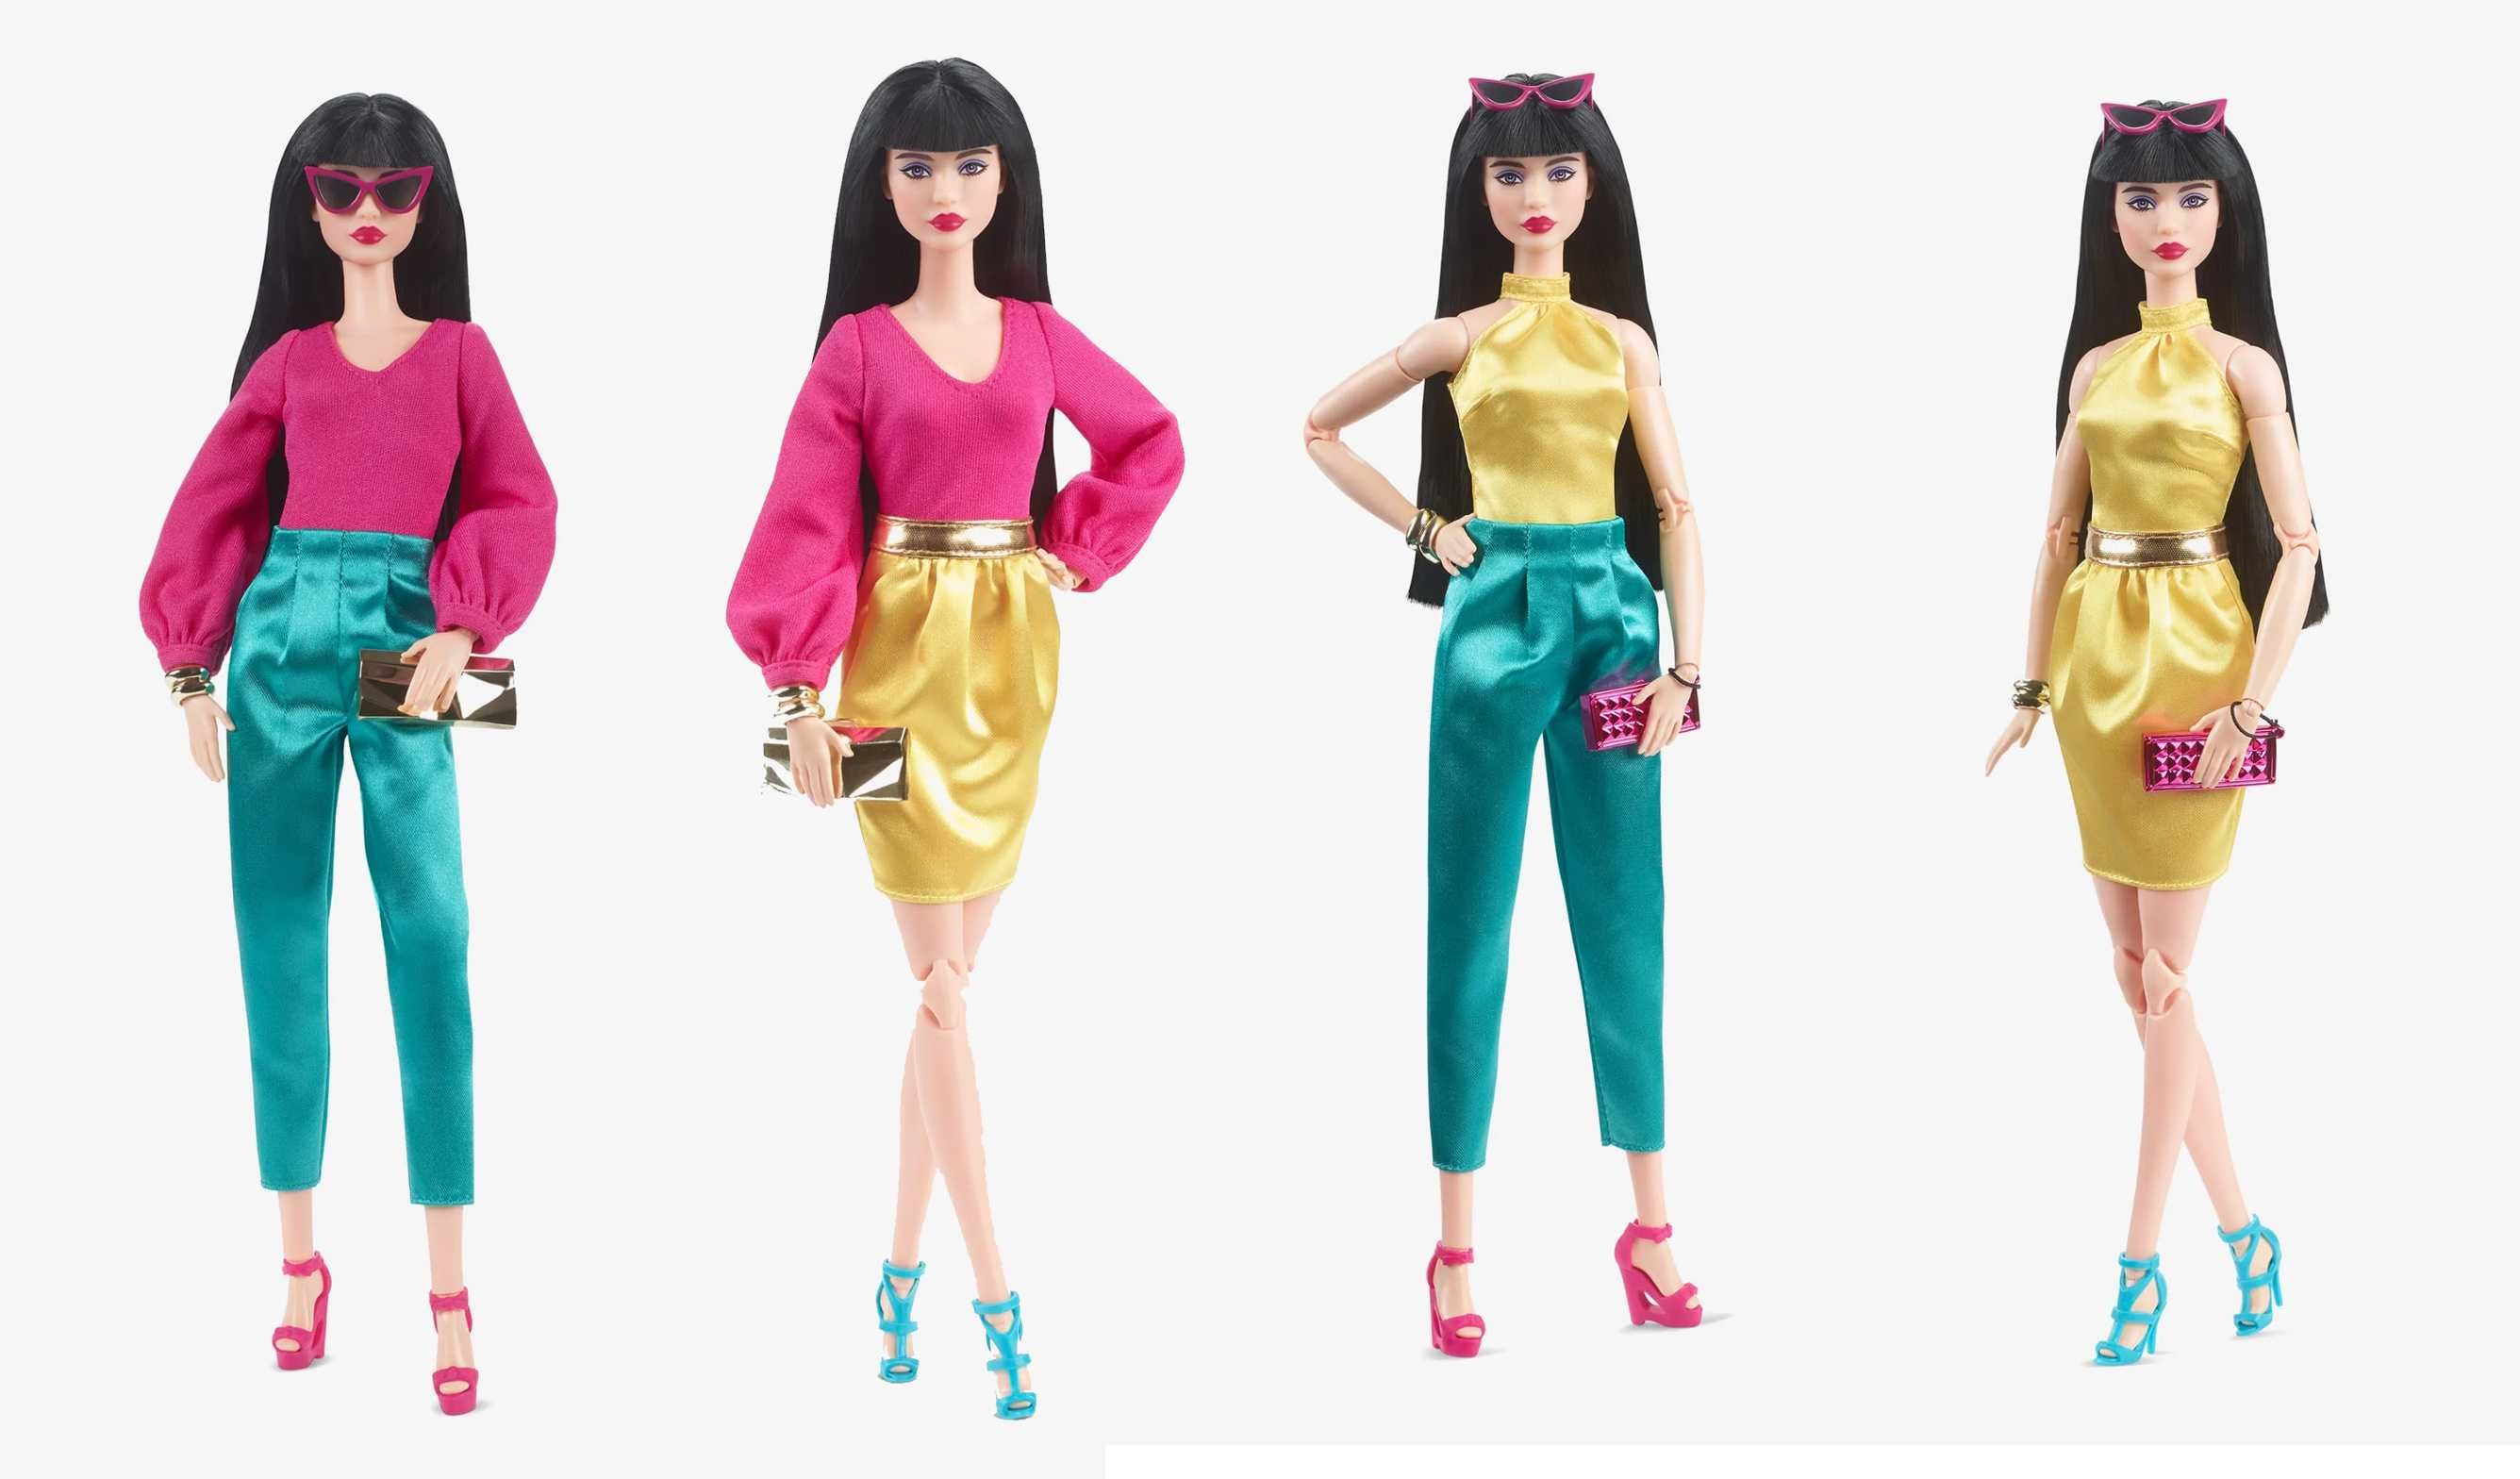 Кукла коллекционная Барби Лукс 19 Barbie Looks Signature